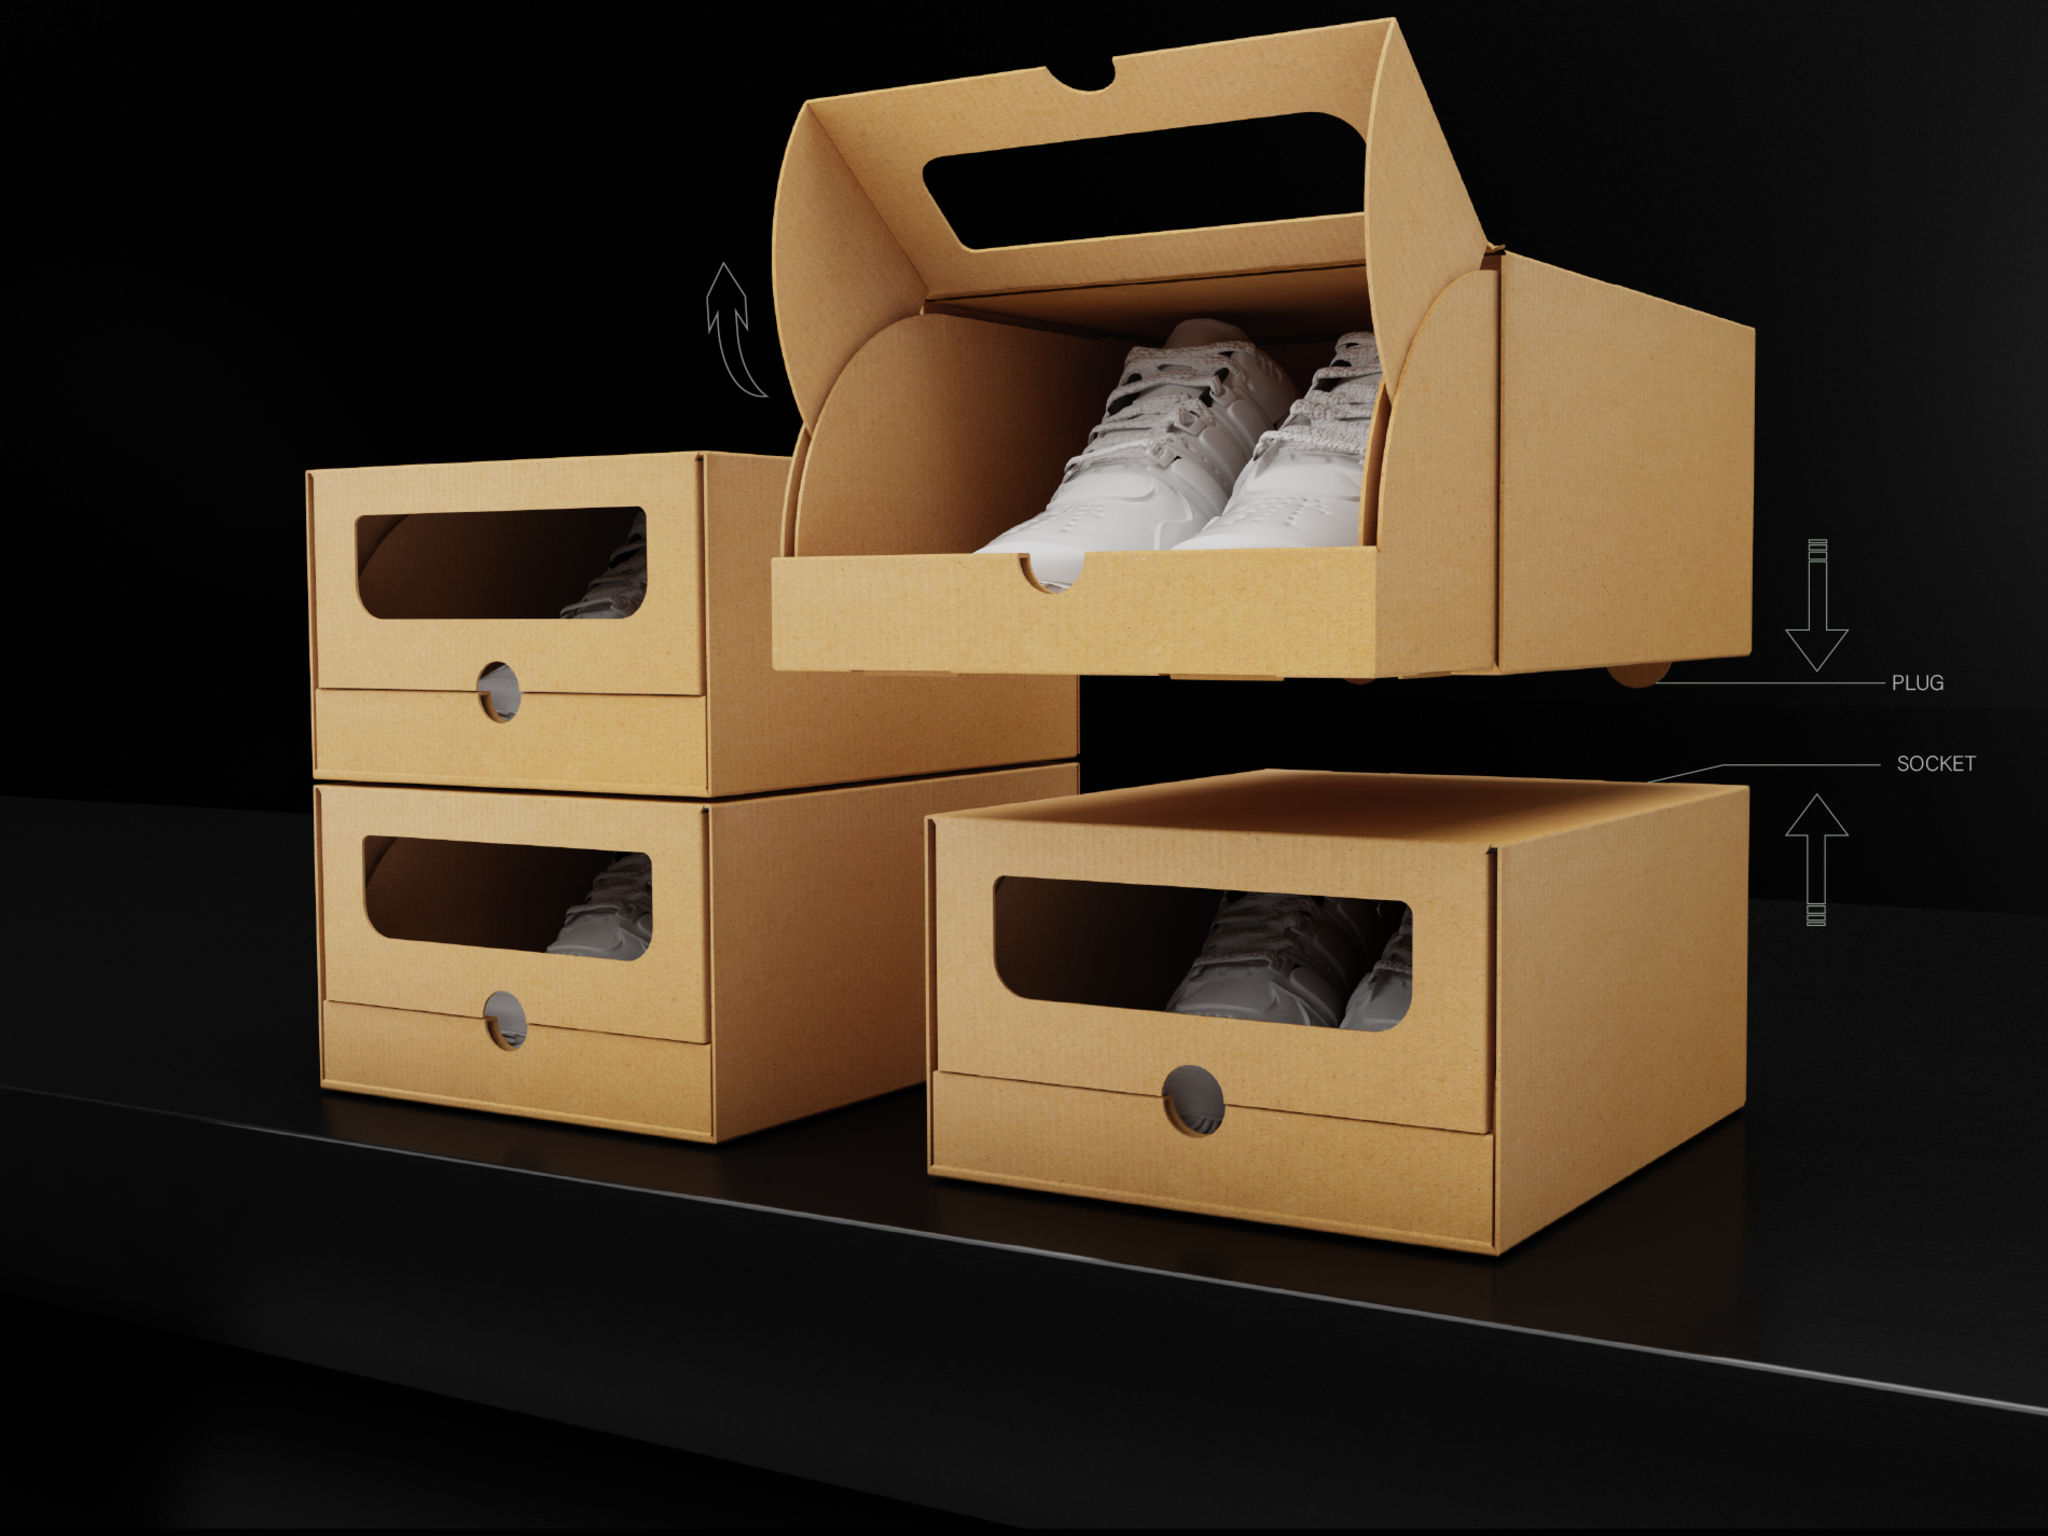 Spin Verbieden Portier iF Design - Shoe box design with creative storage